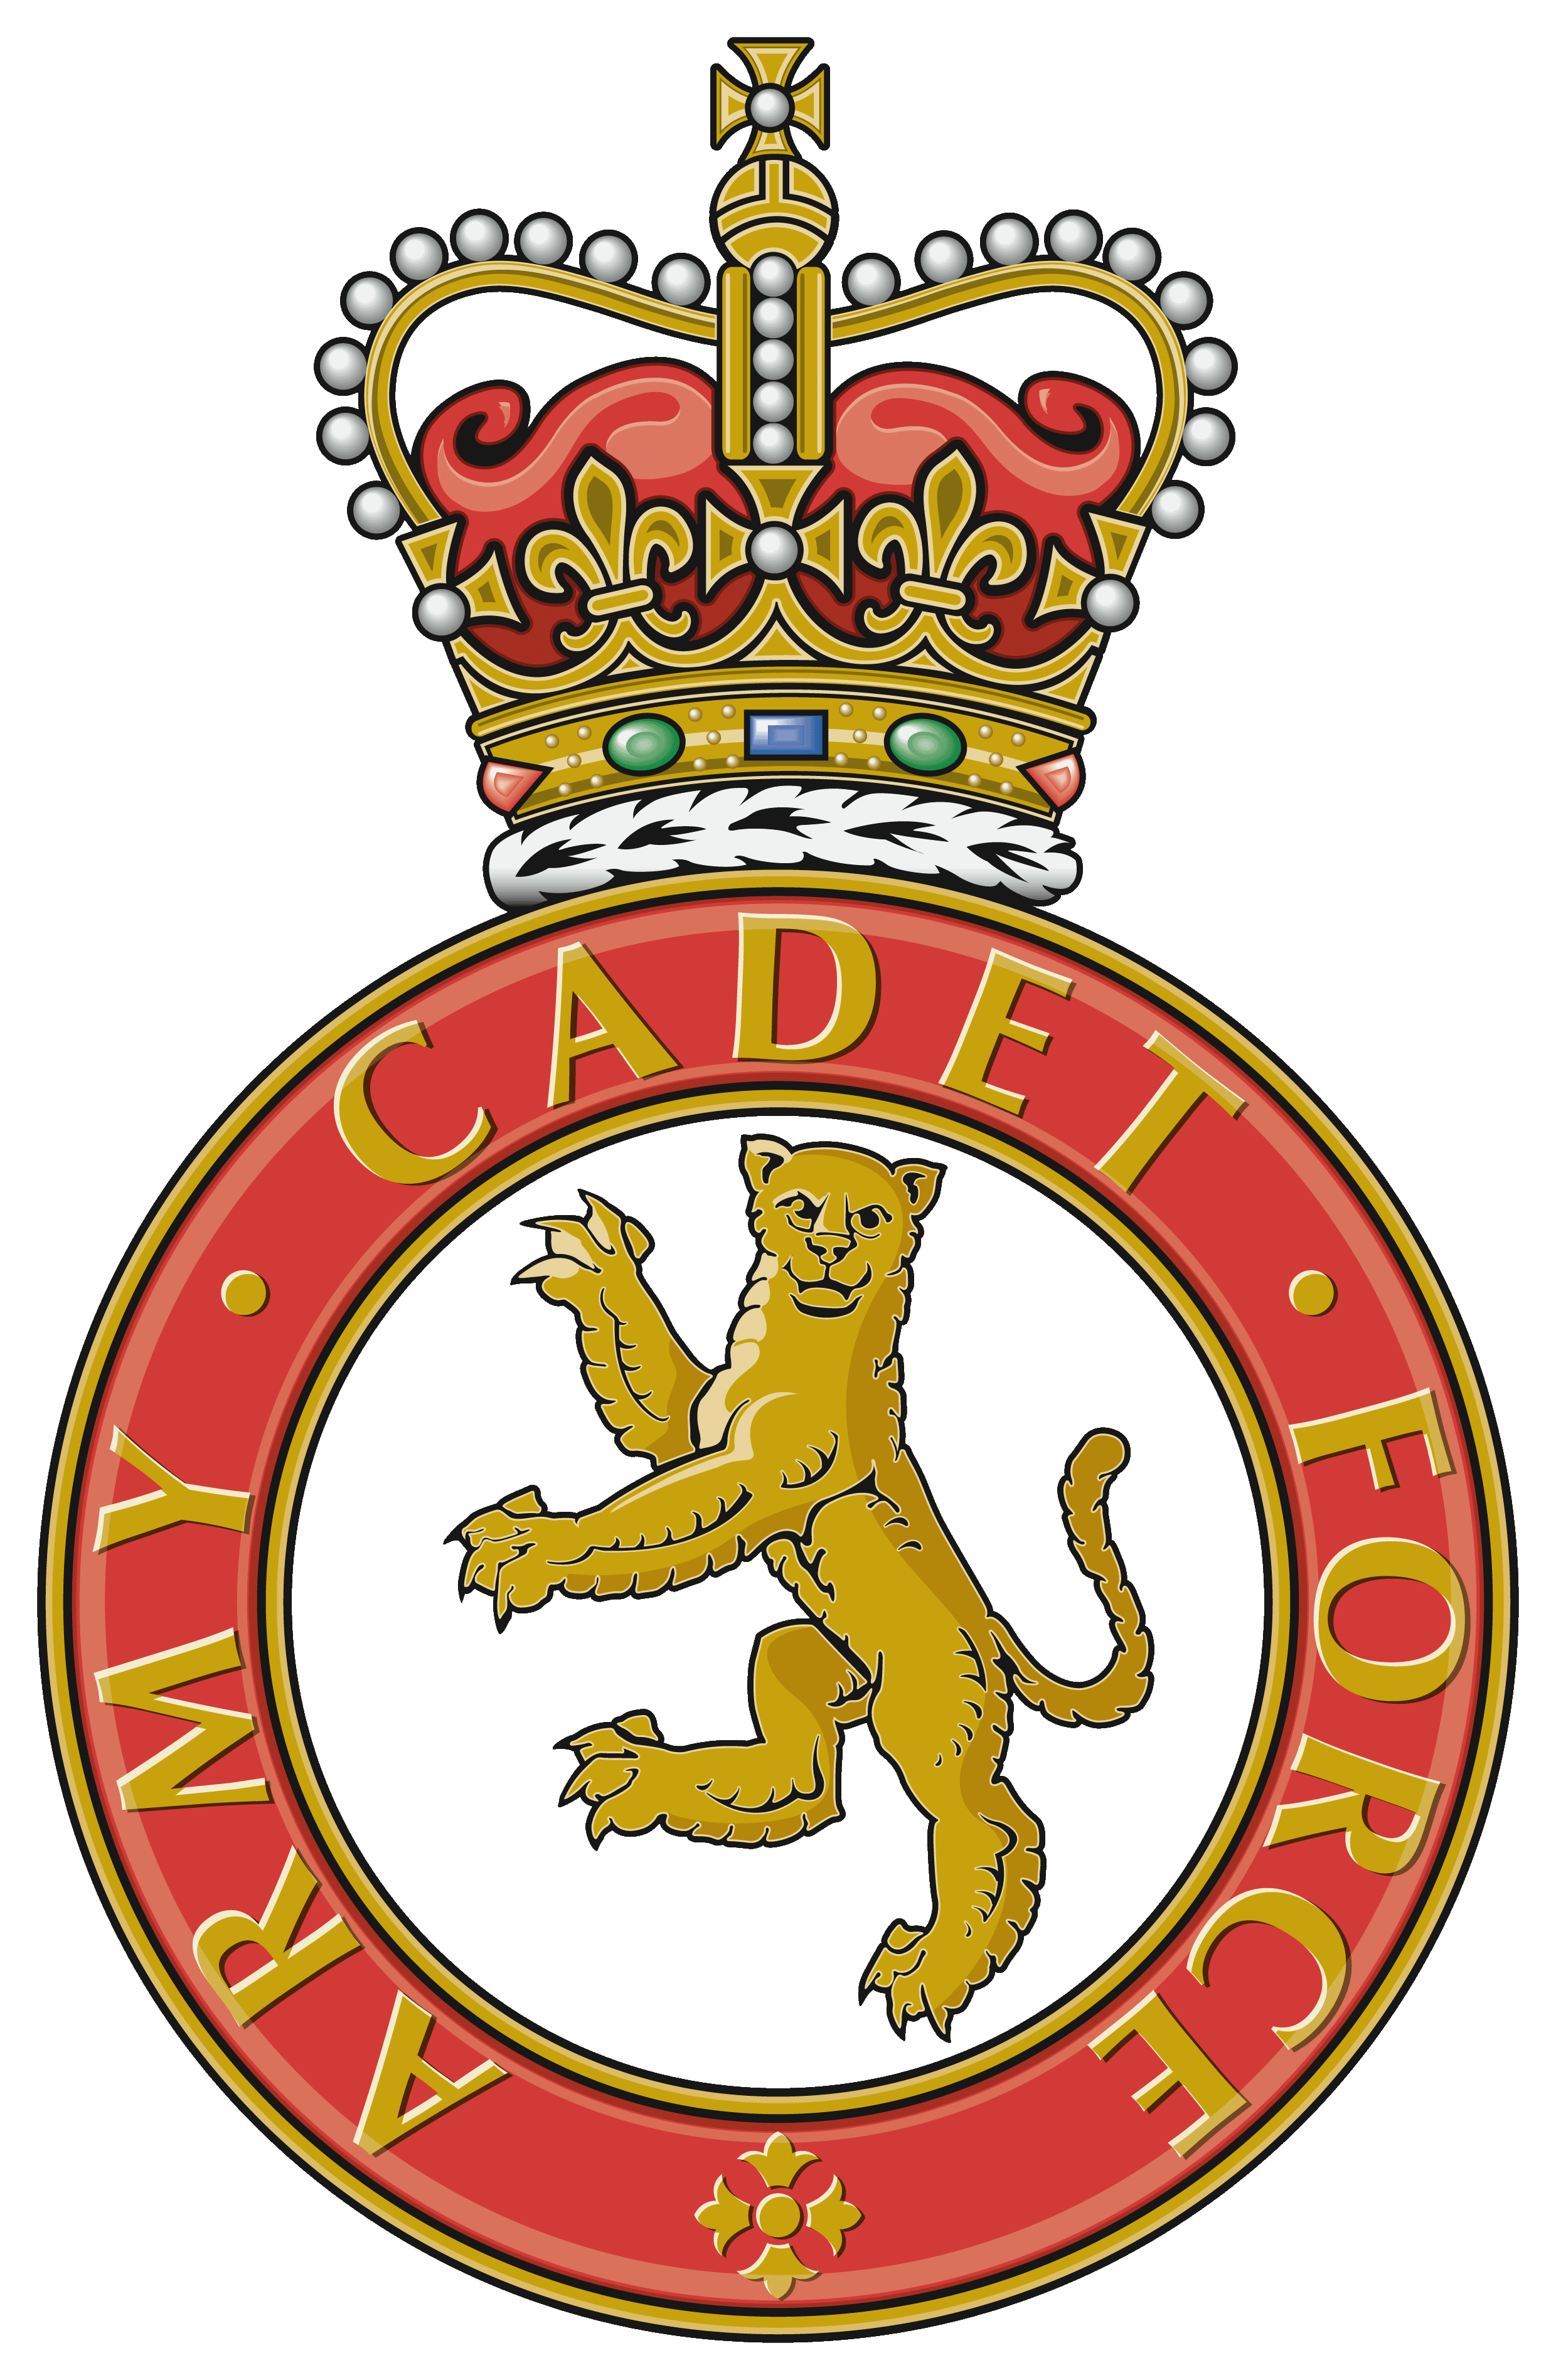 Cadet Logo - File:ACF Logo.png - Wikimedia Commons